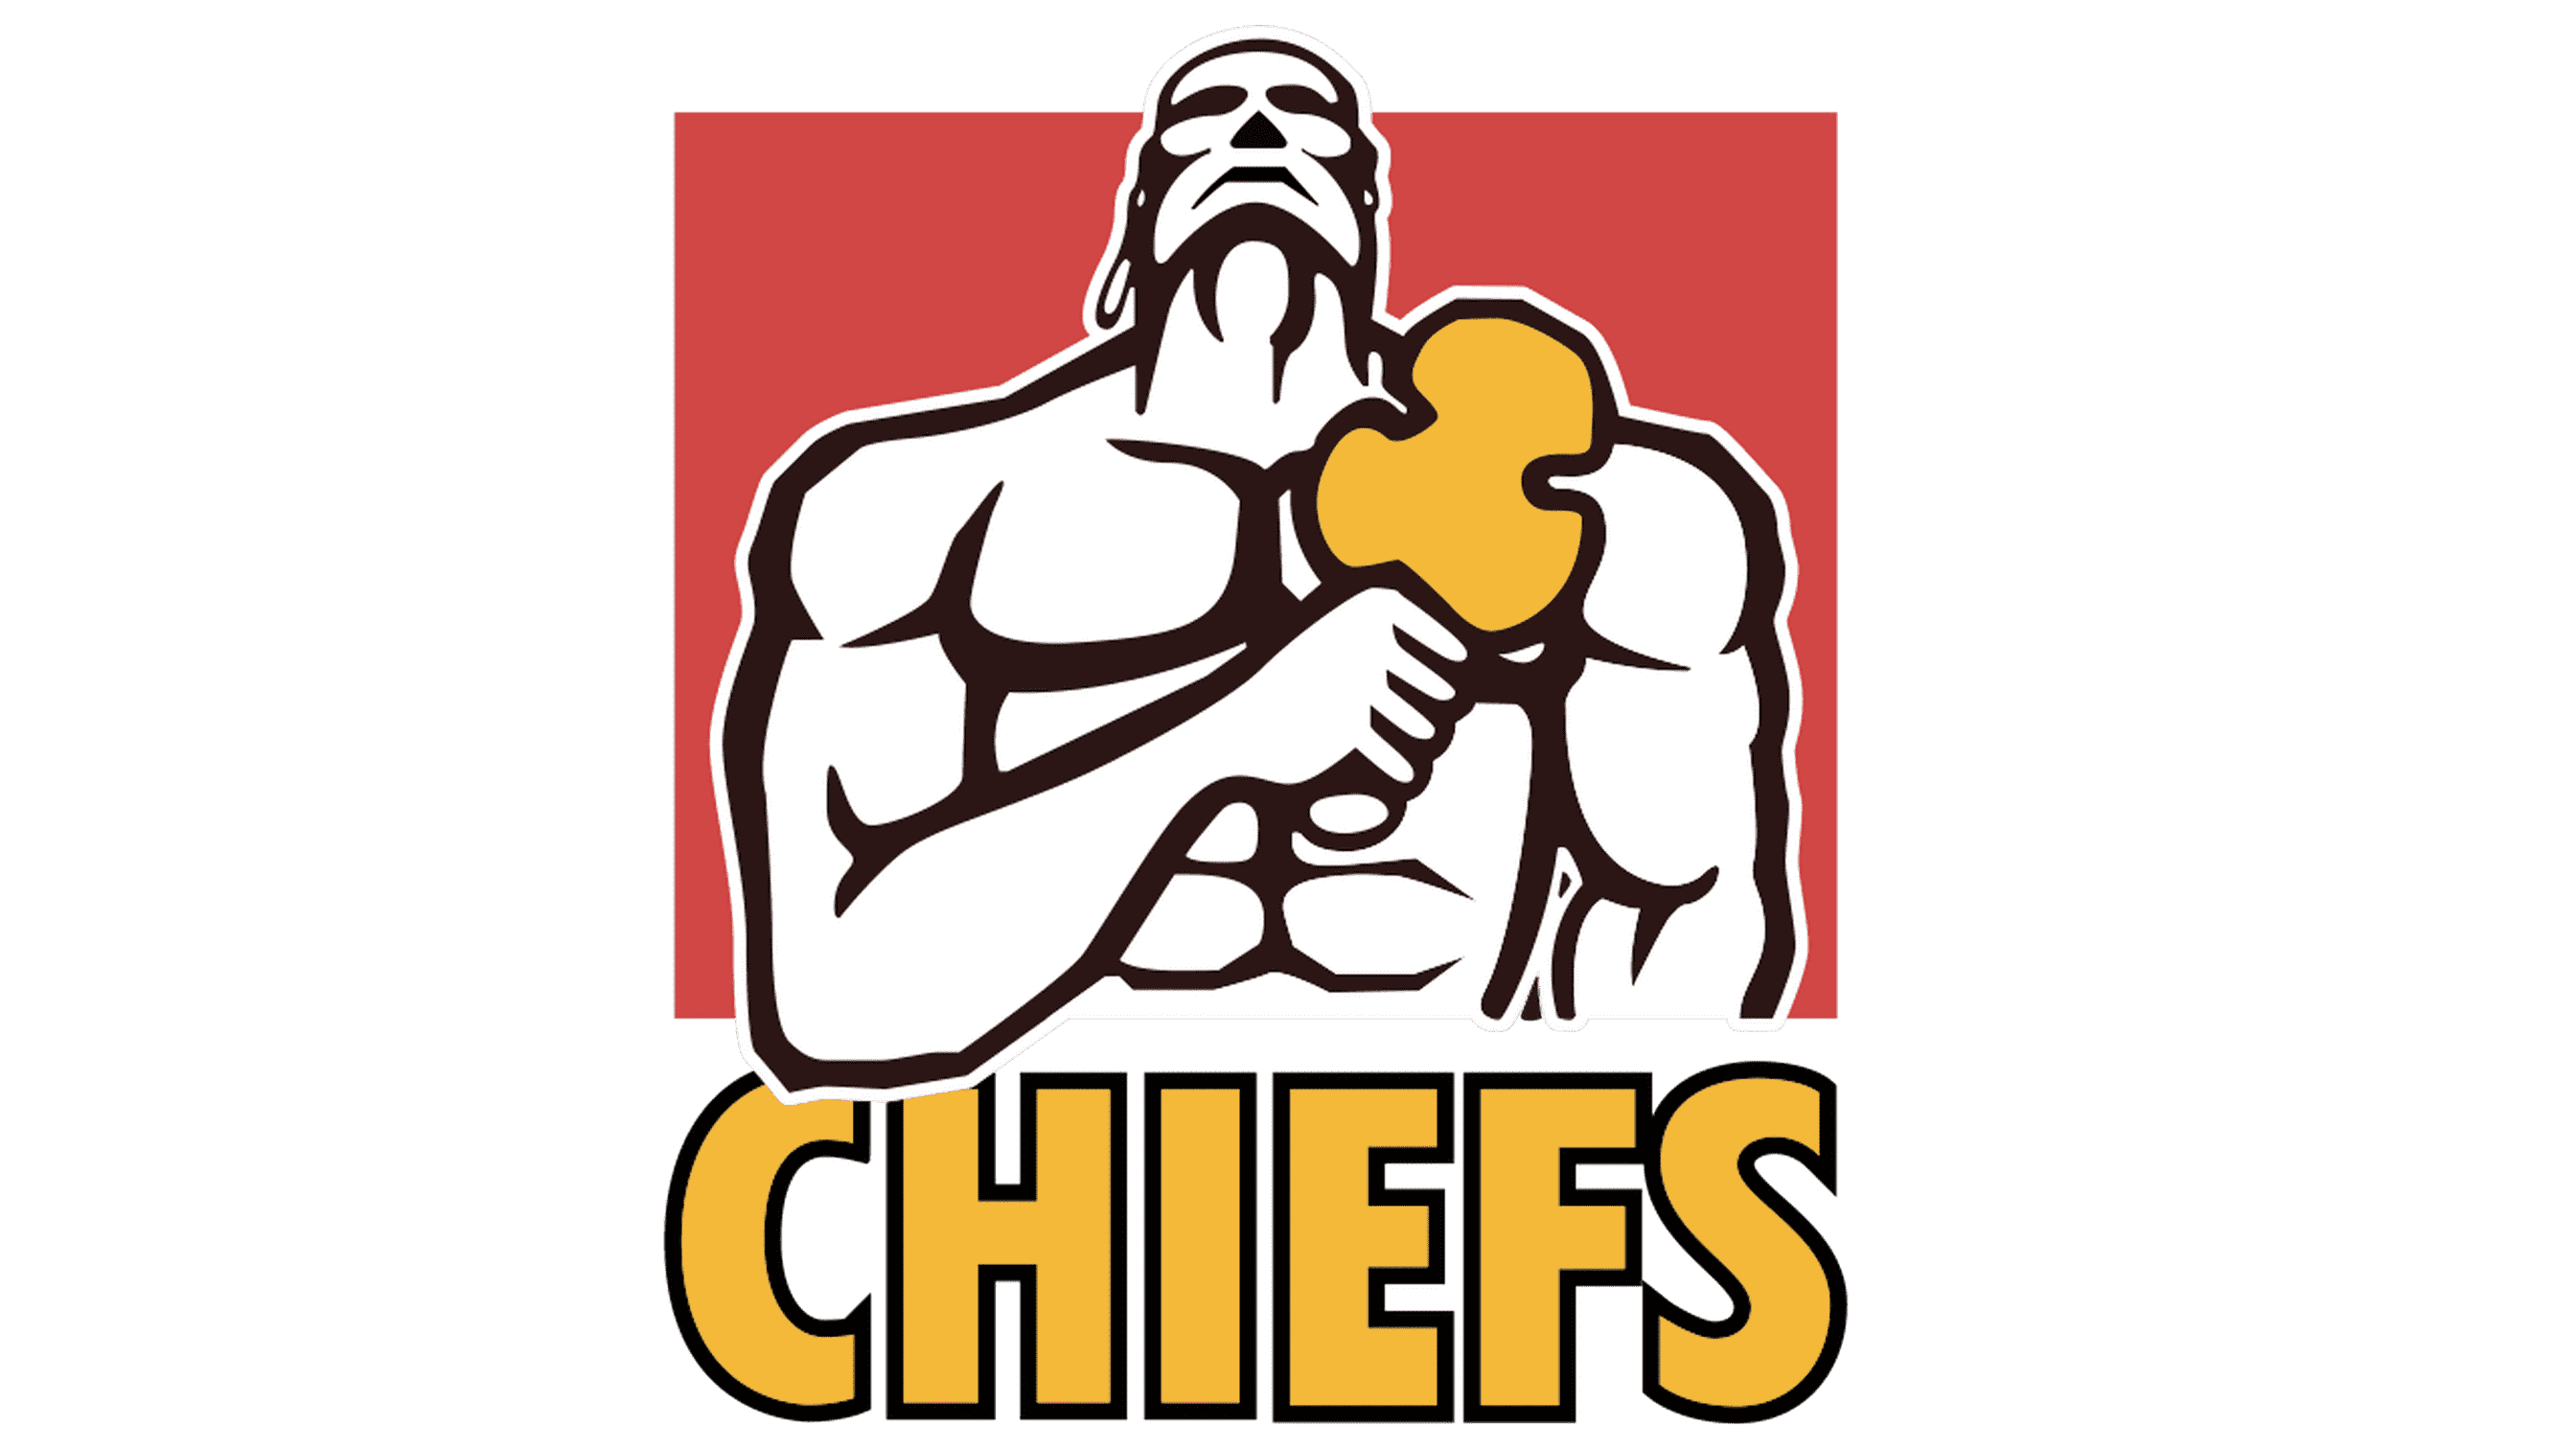 Chiefs 